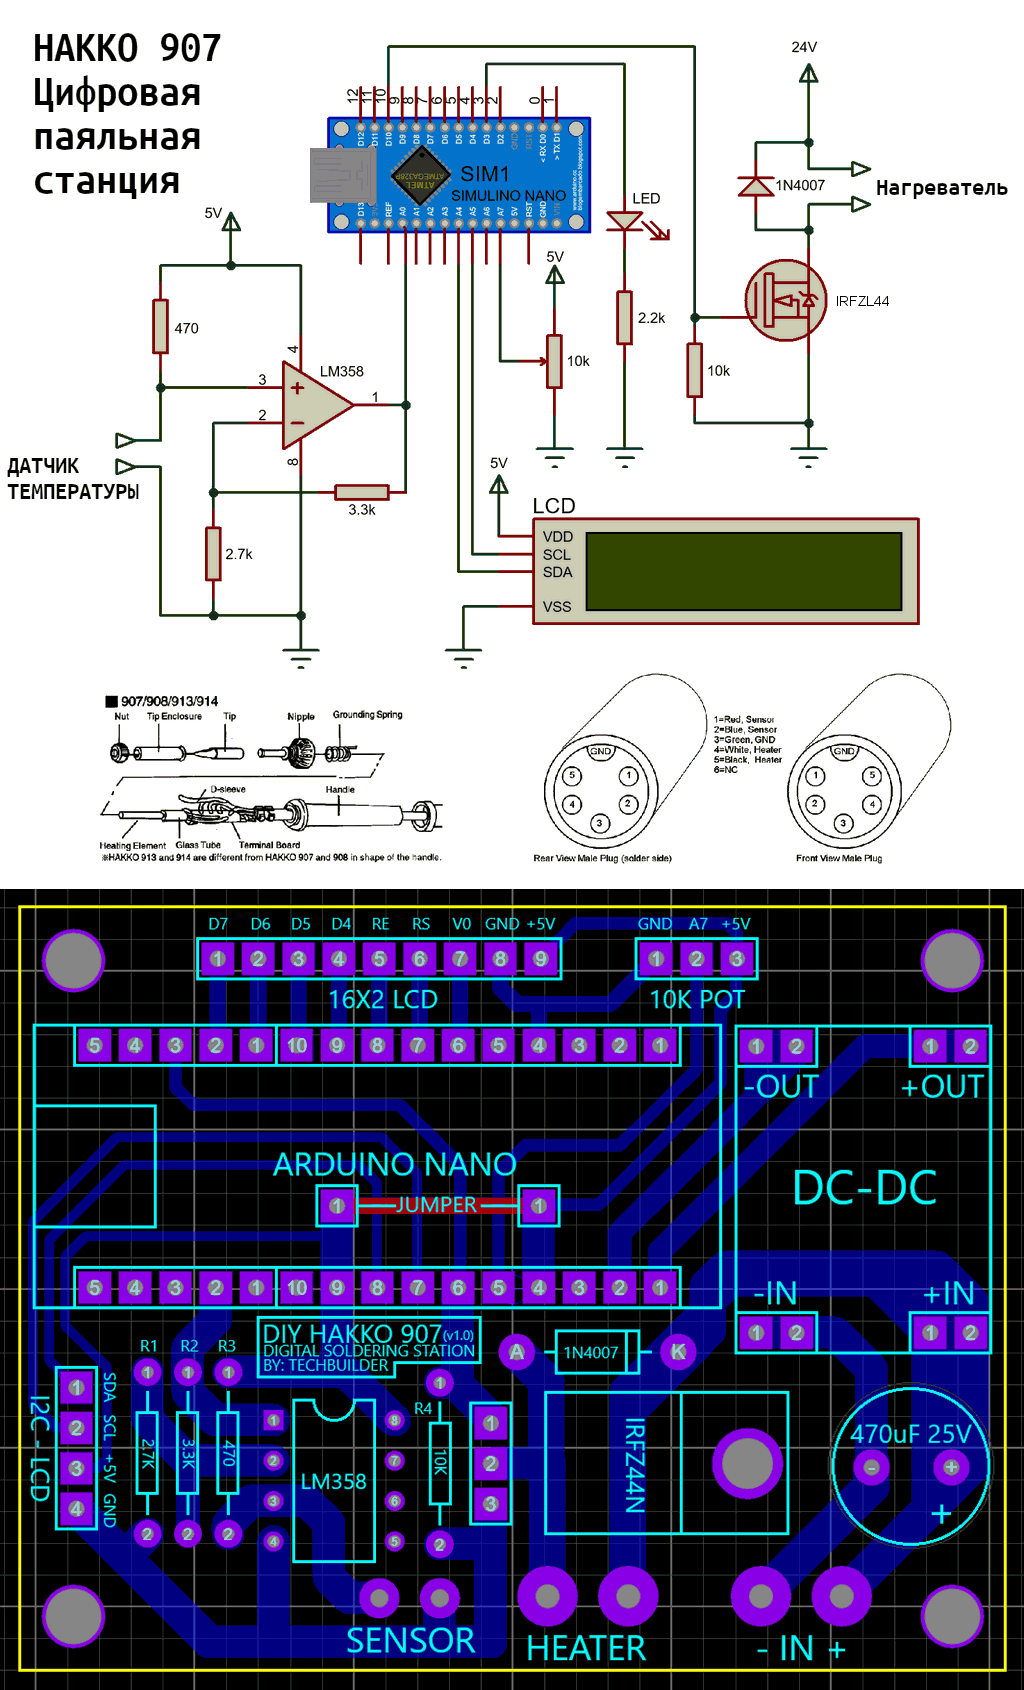 Schematic Simple Digital Soldering Station 19v 18v Hakko 907 Arduino Nano